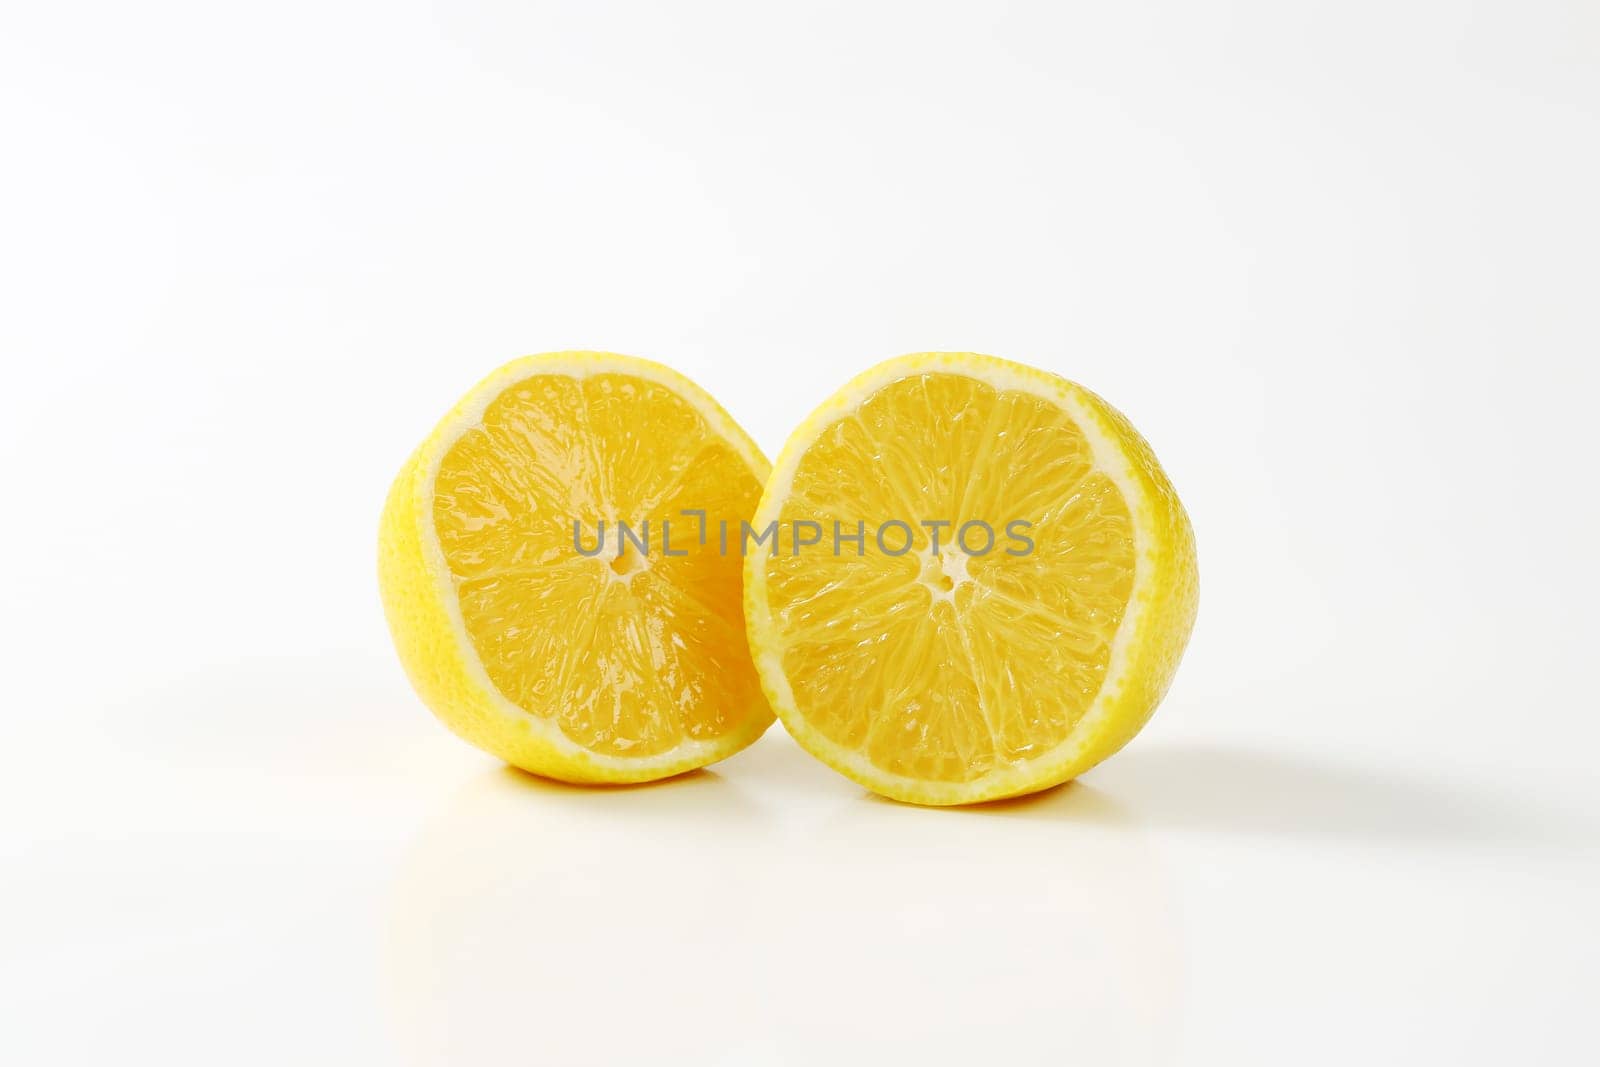 Fresh lemon cut into two halves